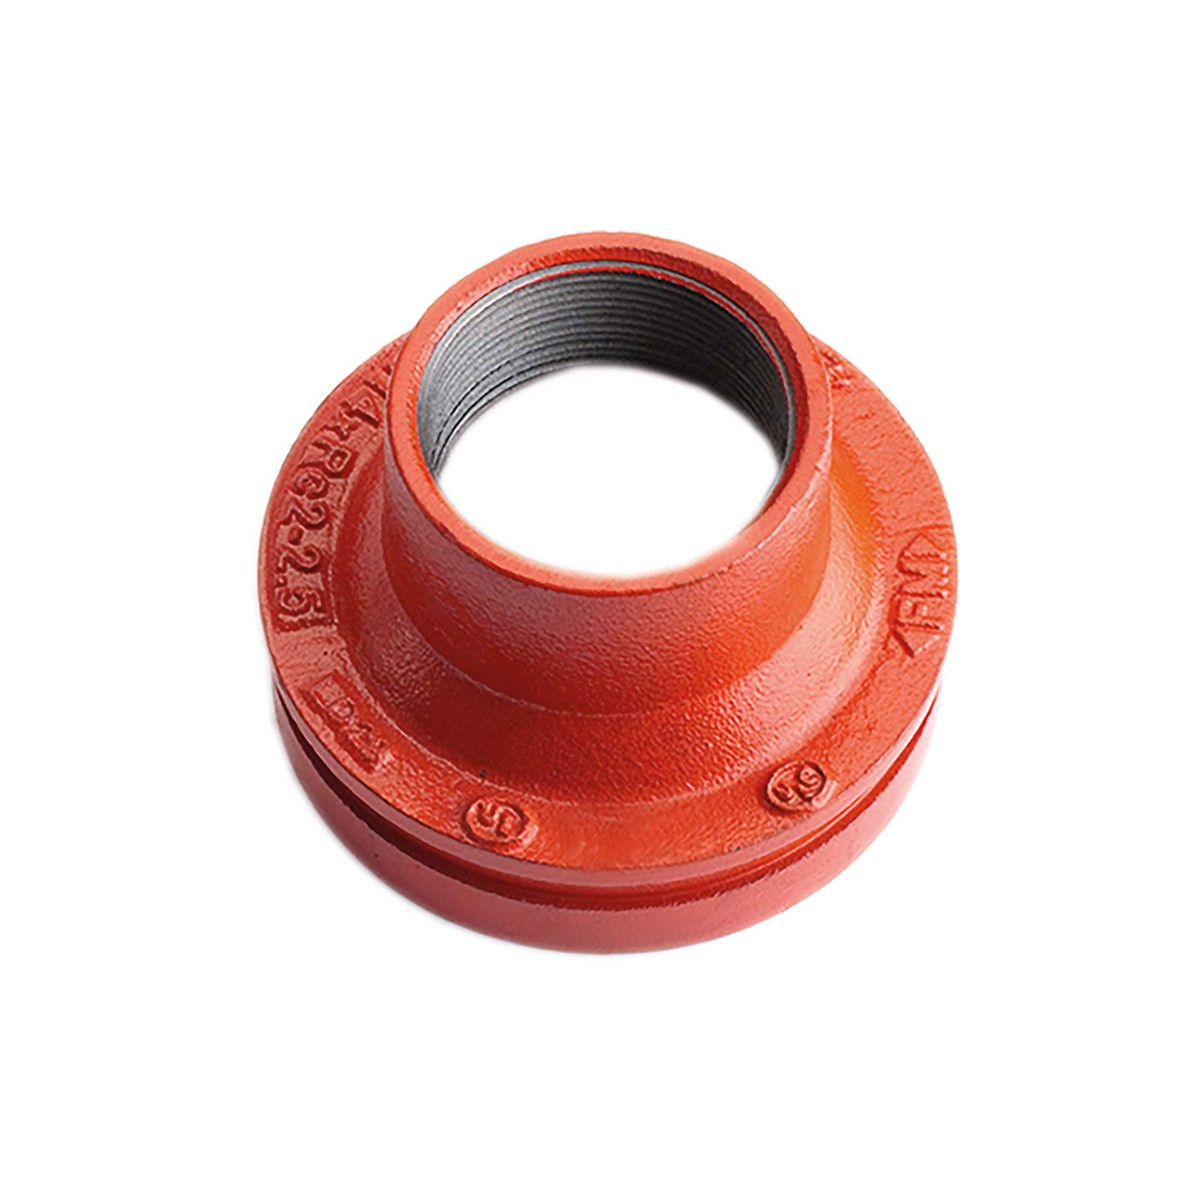 INTERSCHUTZ Product 2022: Wet alarm valve Flanged with trim (Piping  Logistics)